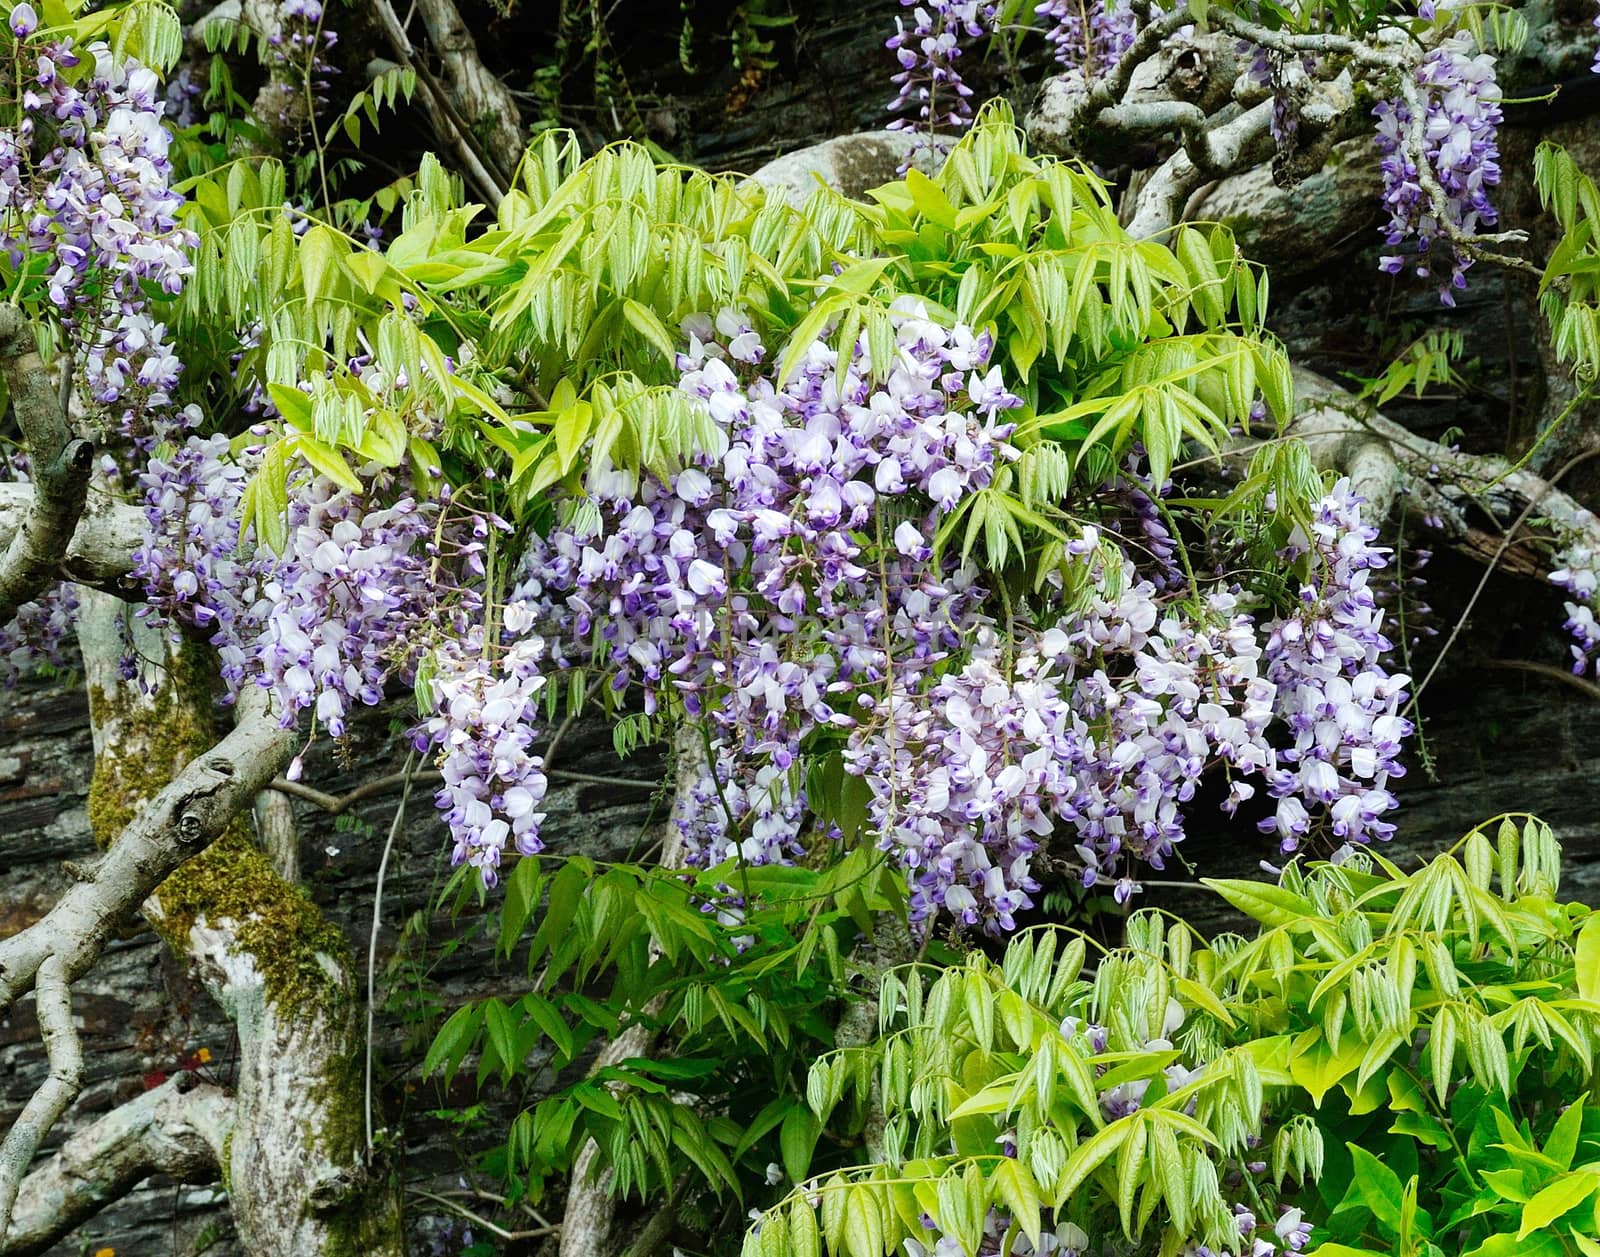 Laburnam tree. Early summer flowering.